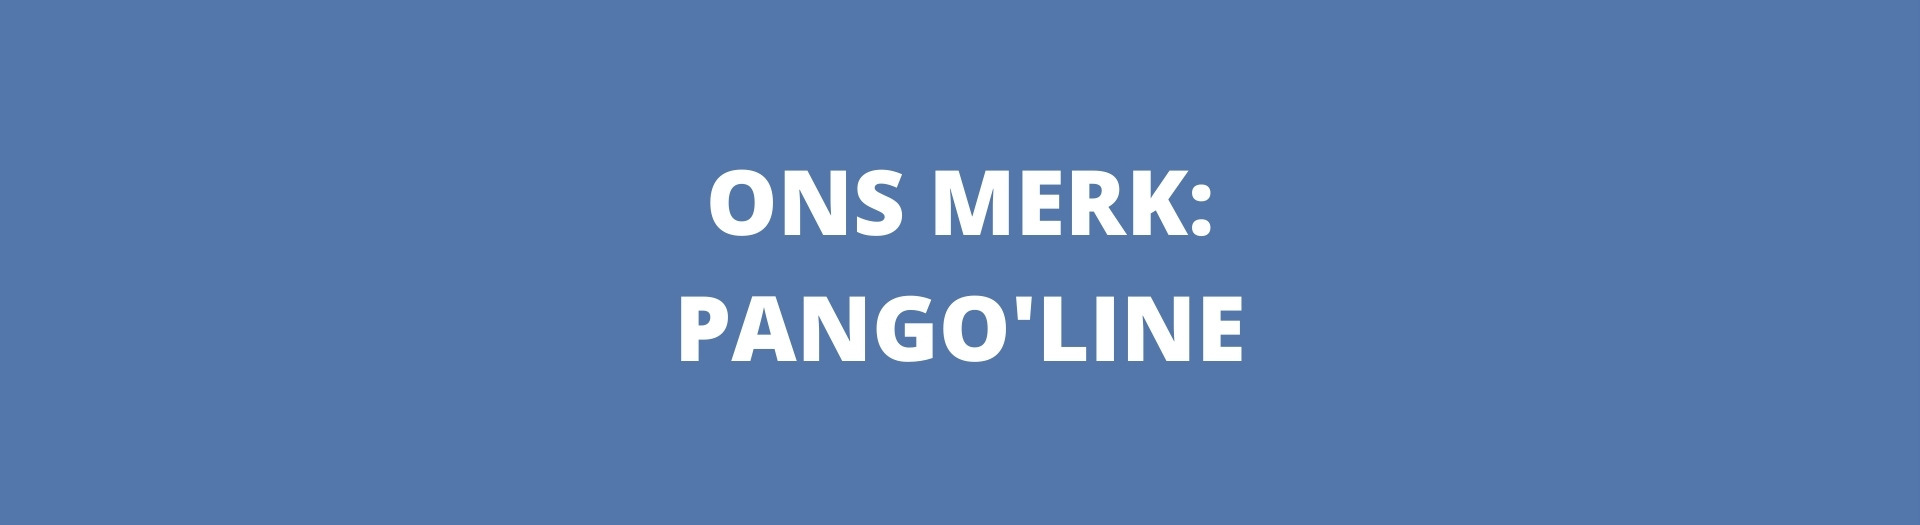 Notre marque: Pango'Line